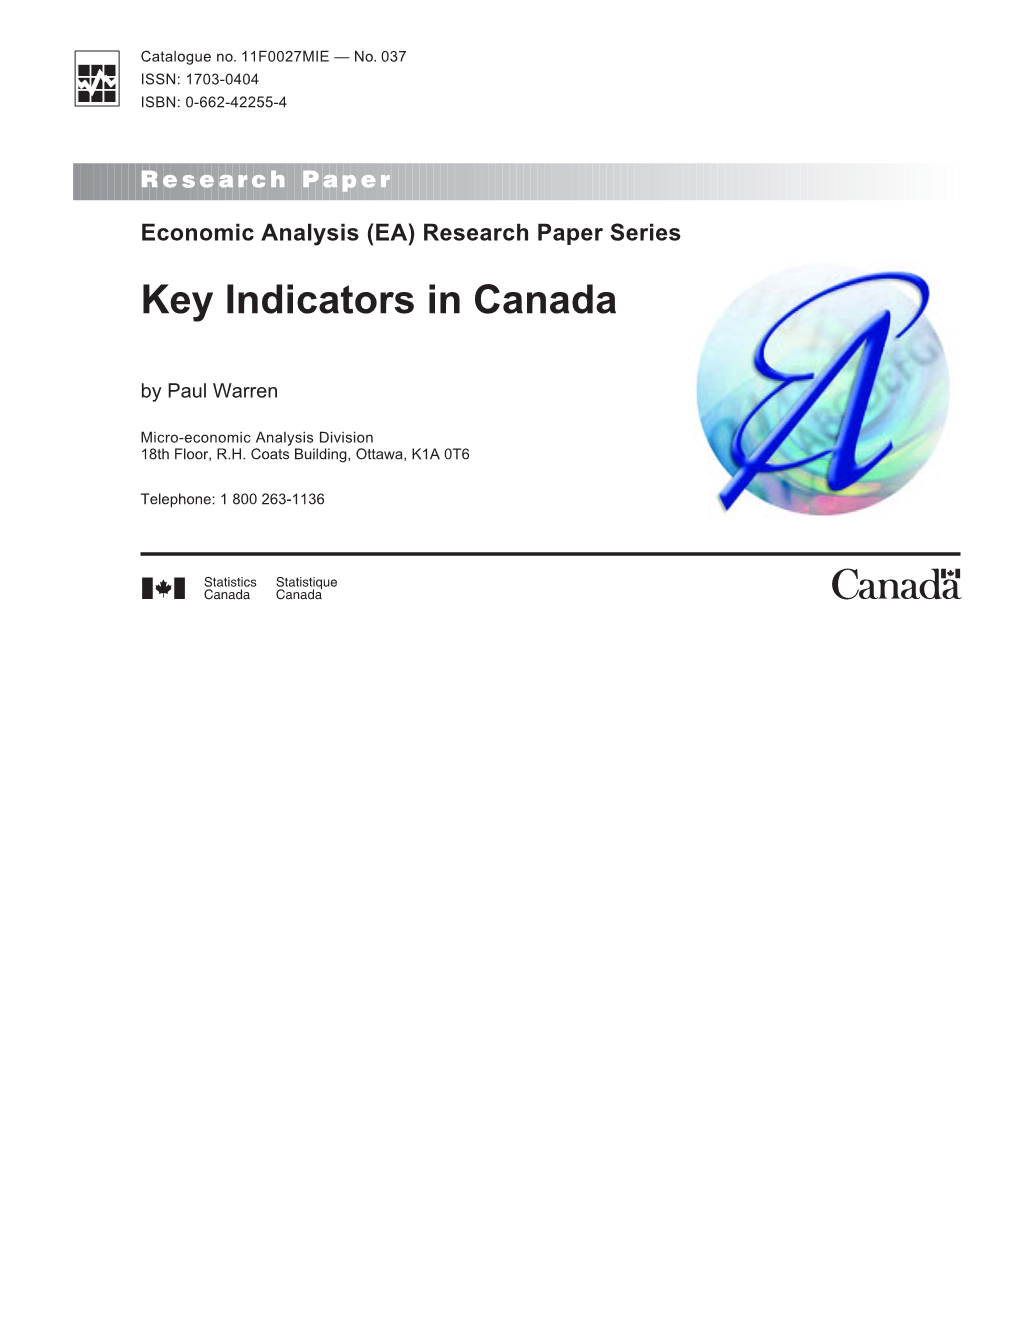 Key Indicators in Canada